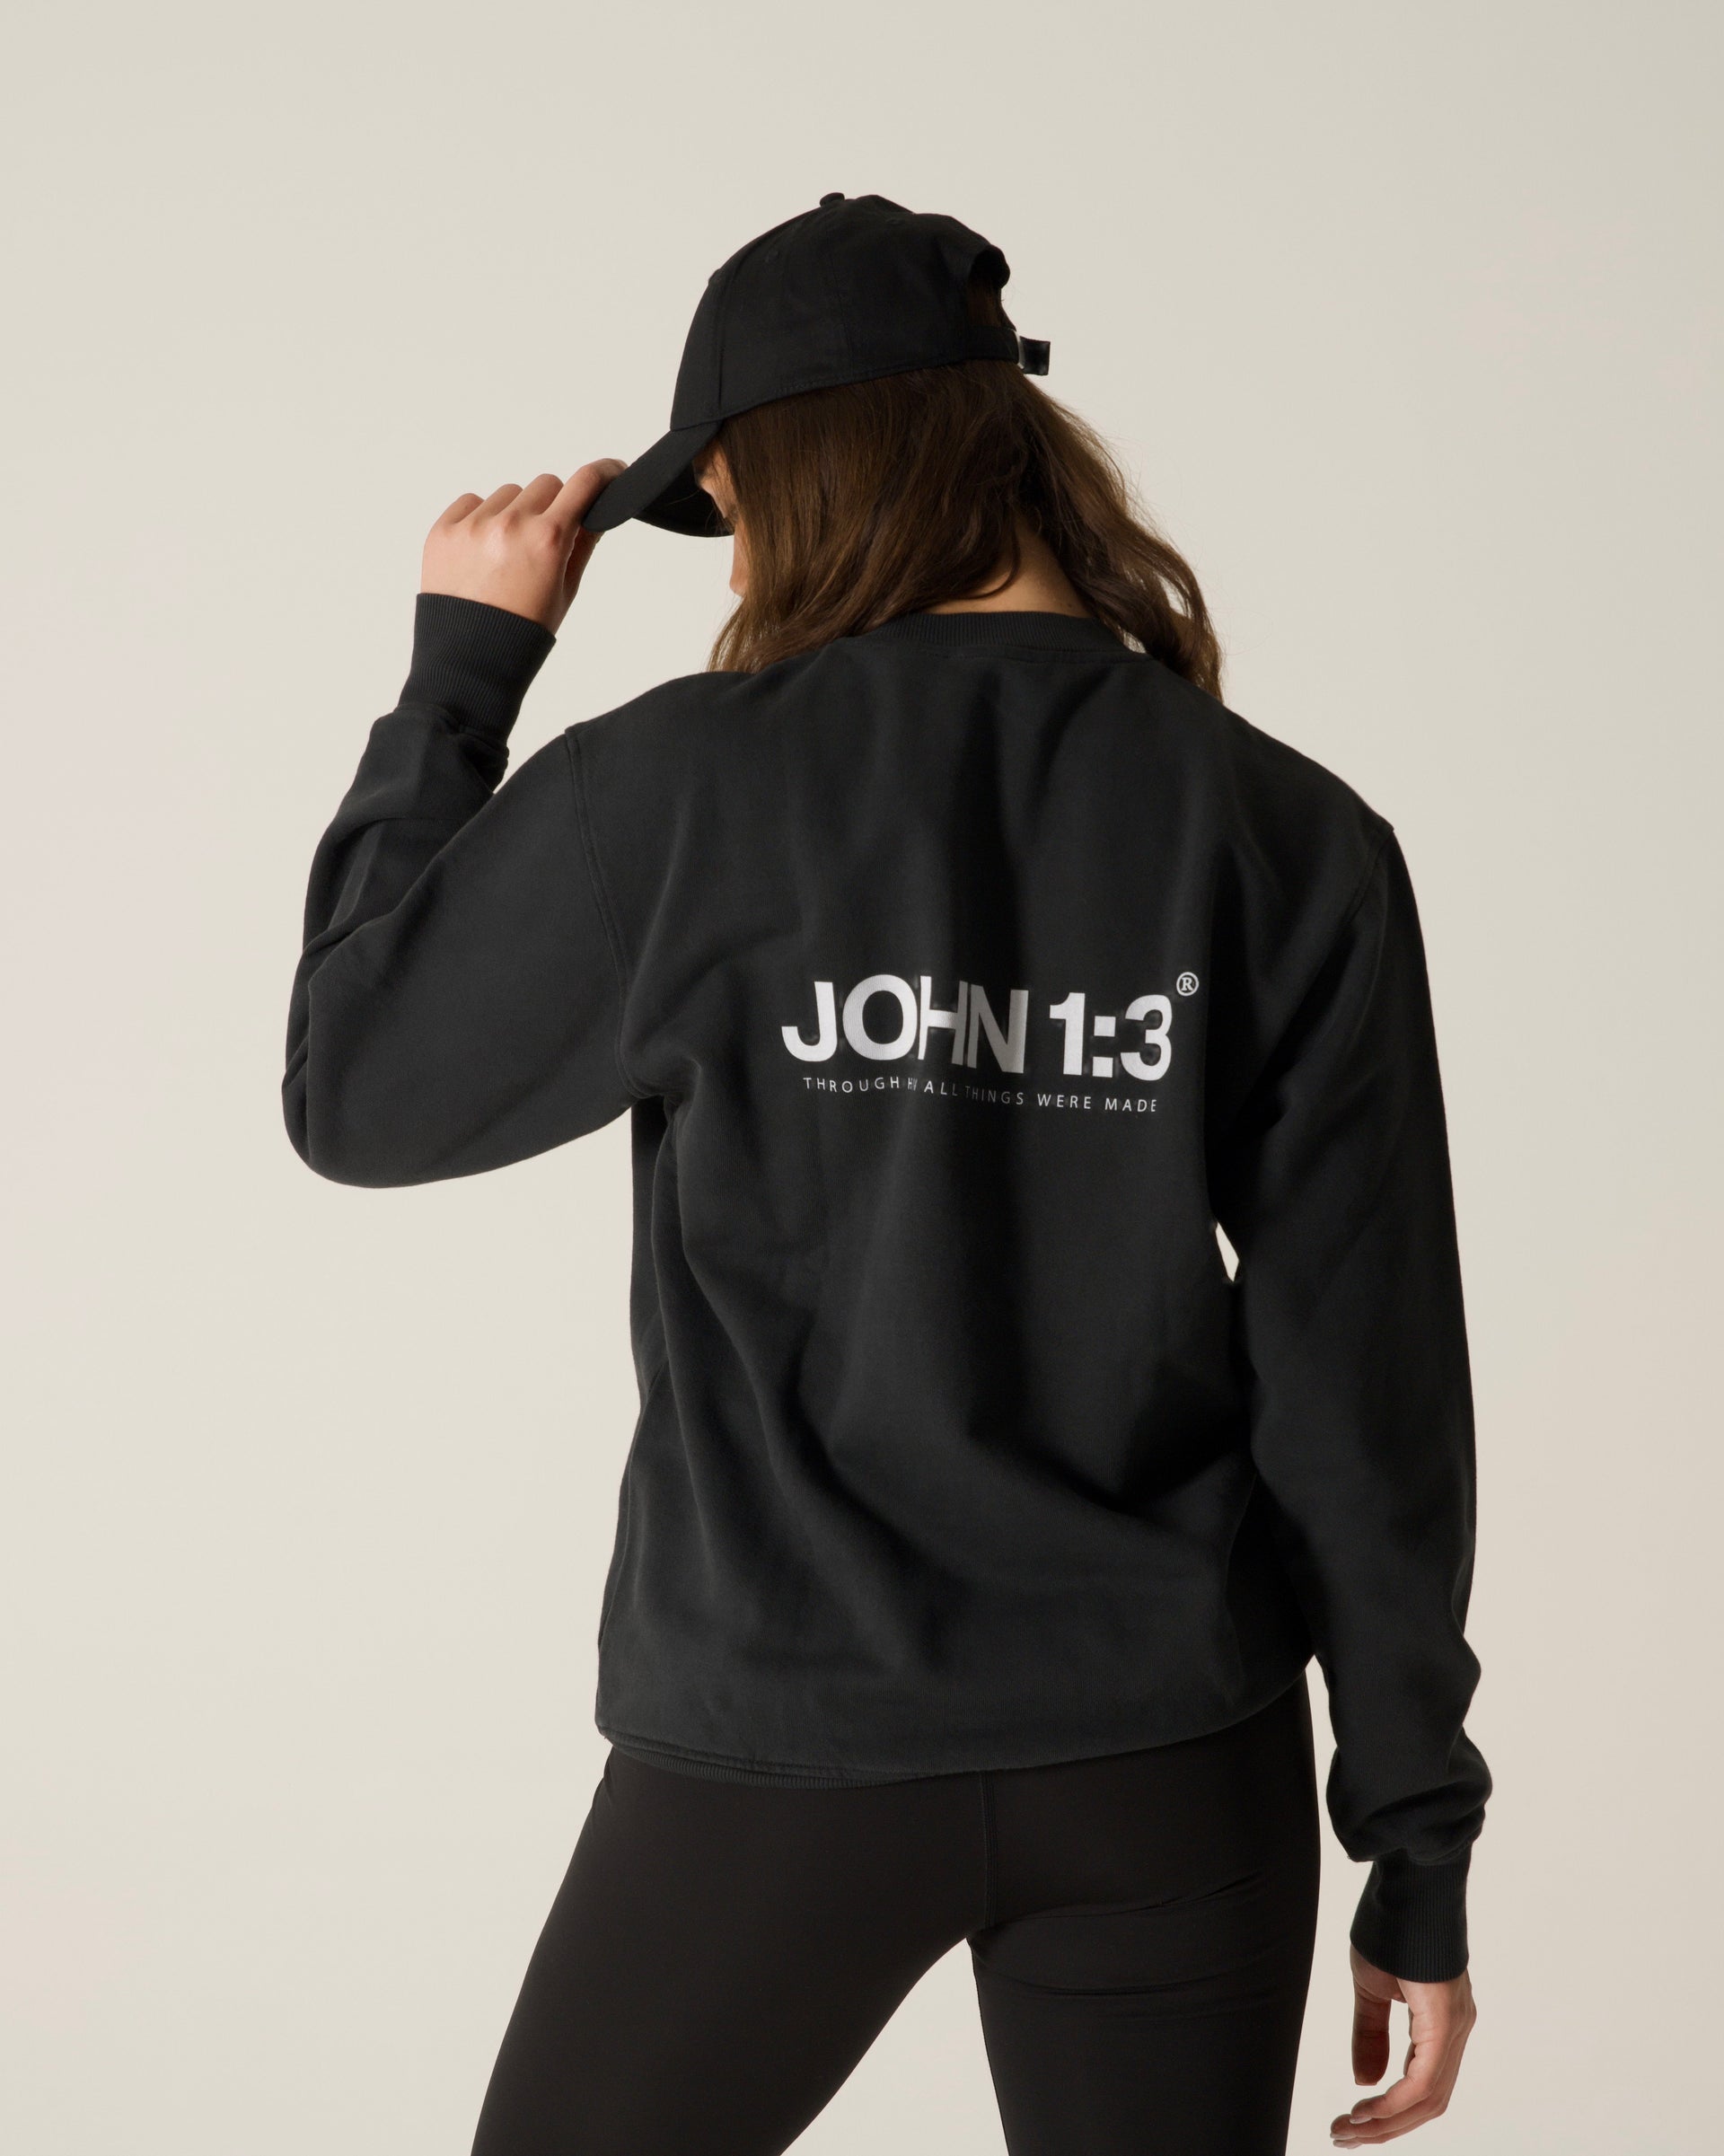 John 3:16 Oversized Sweater - Black